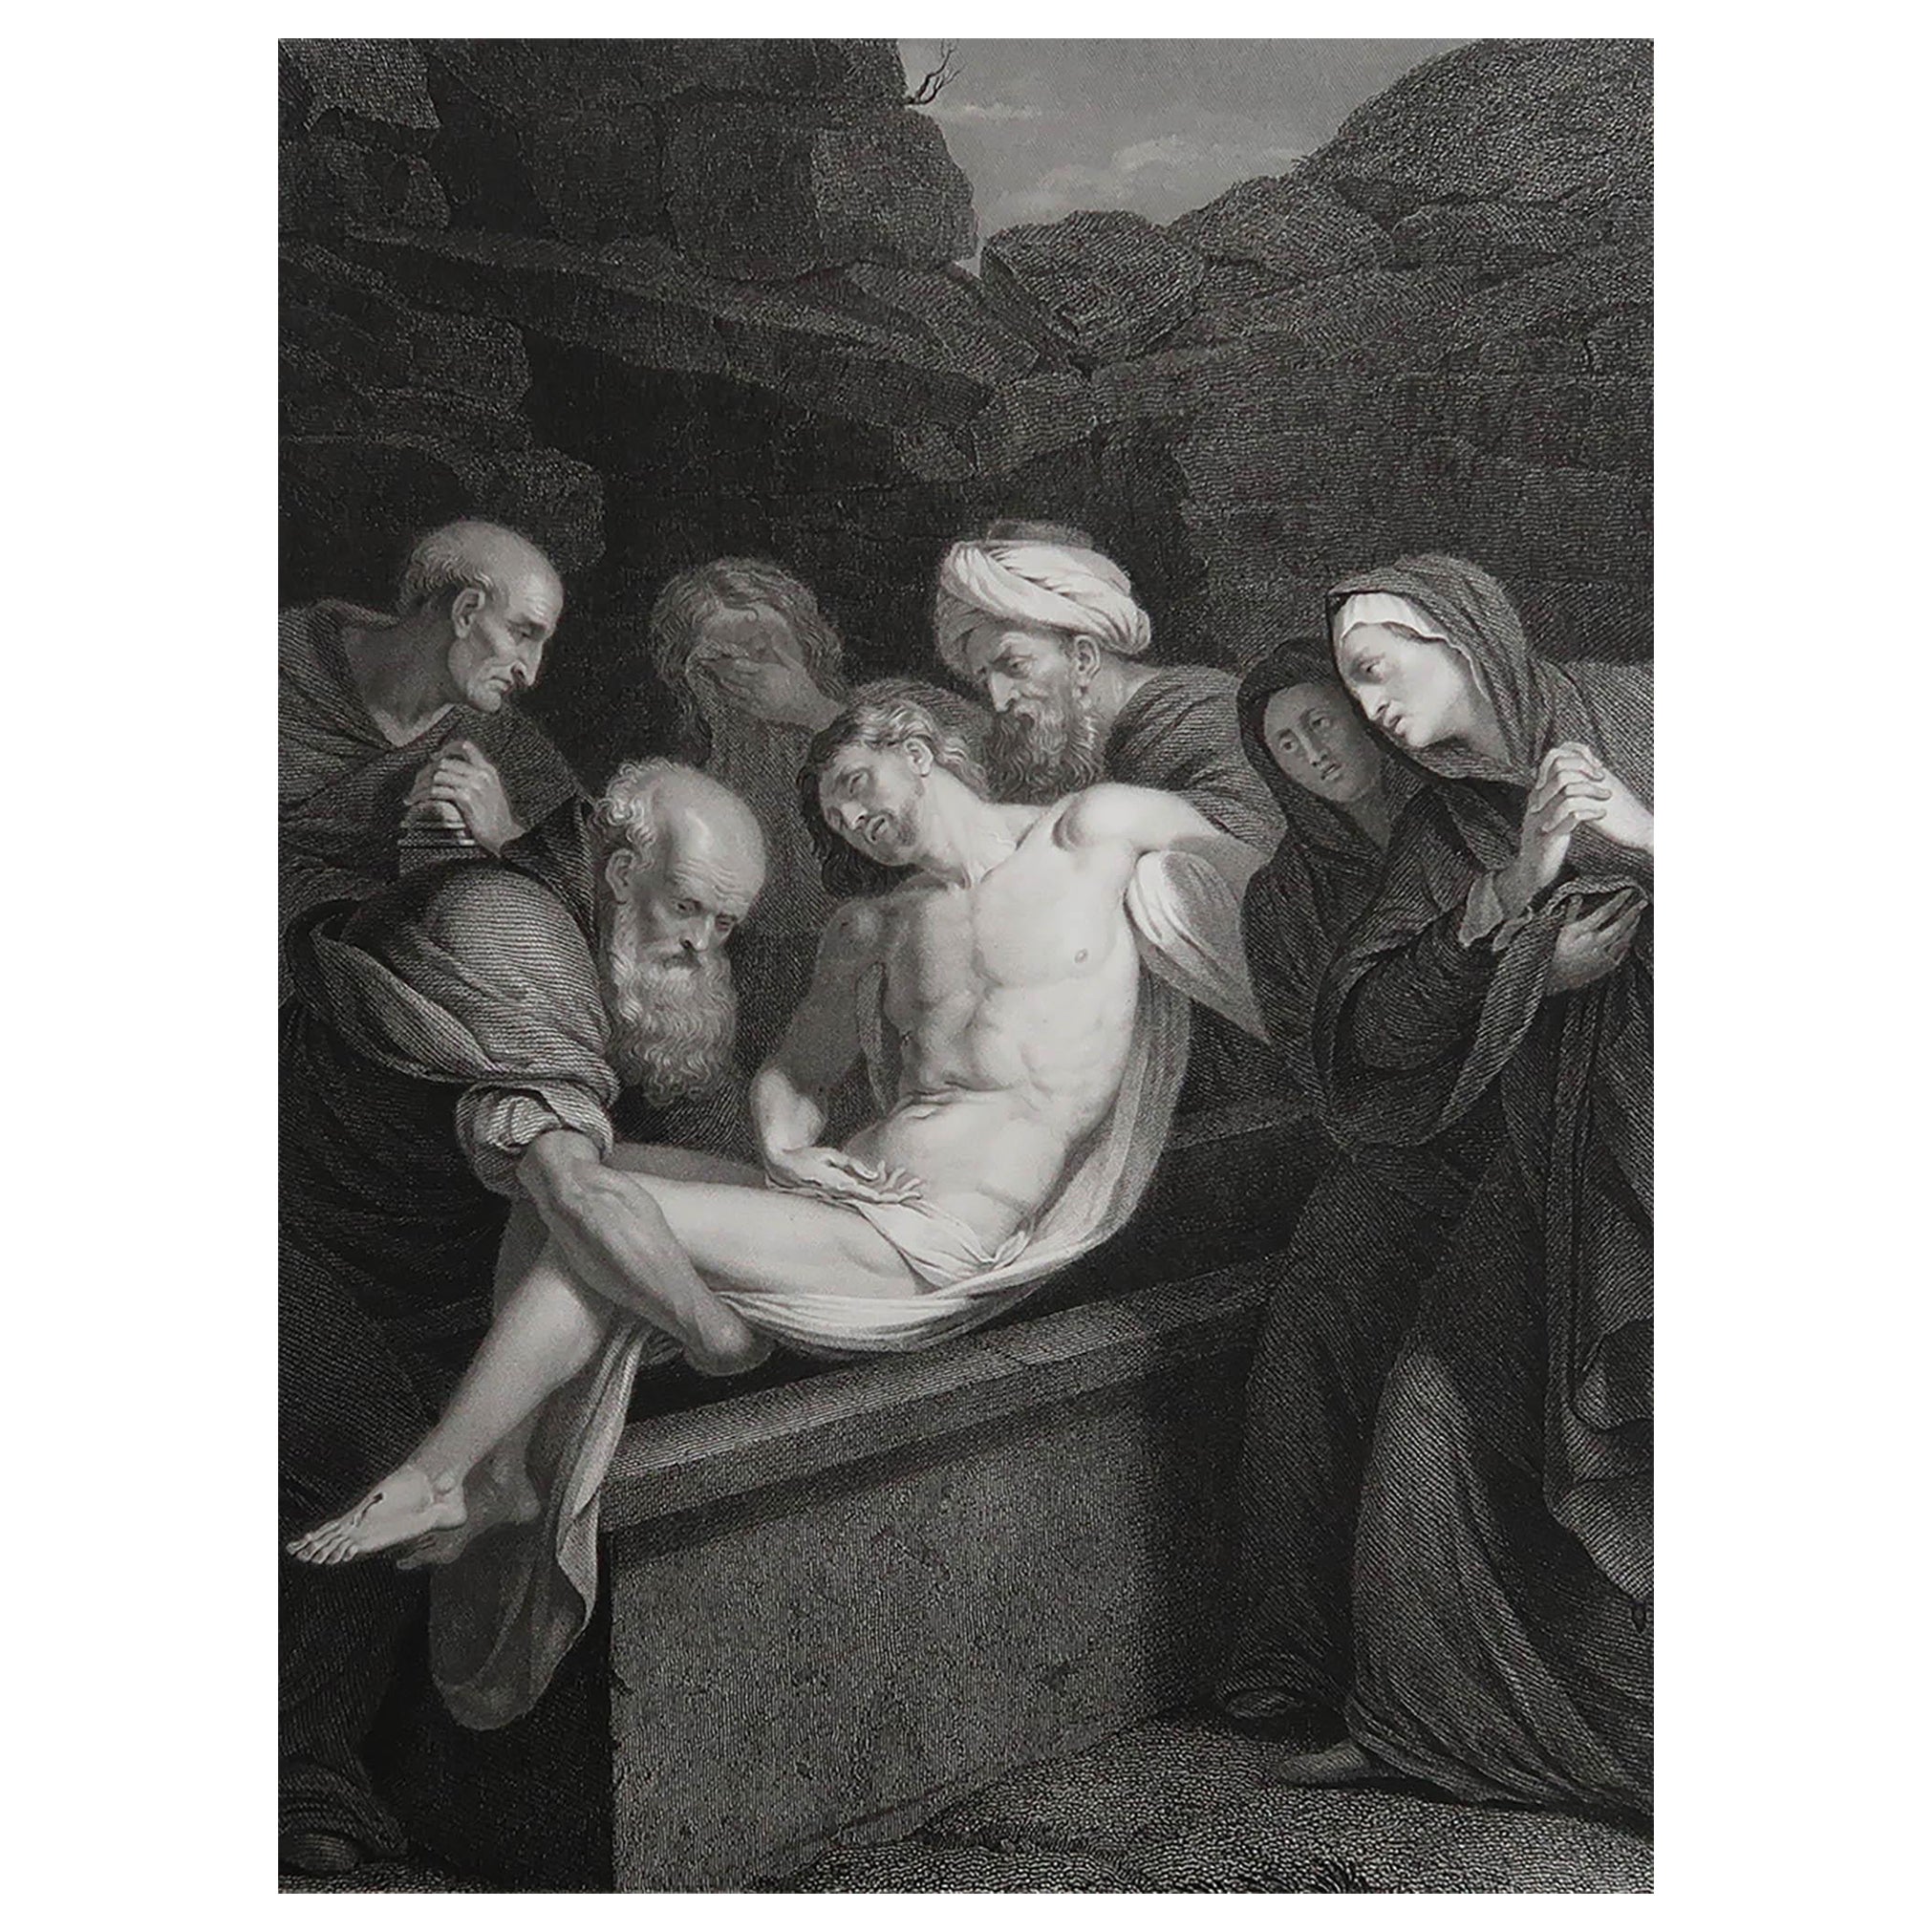 Originaler antiker Druck nach Daniele Crespi, Krönung Christi, um 1840